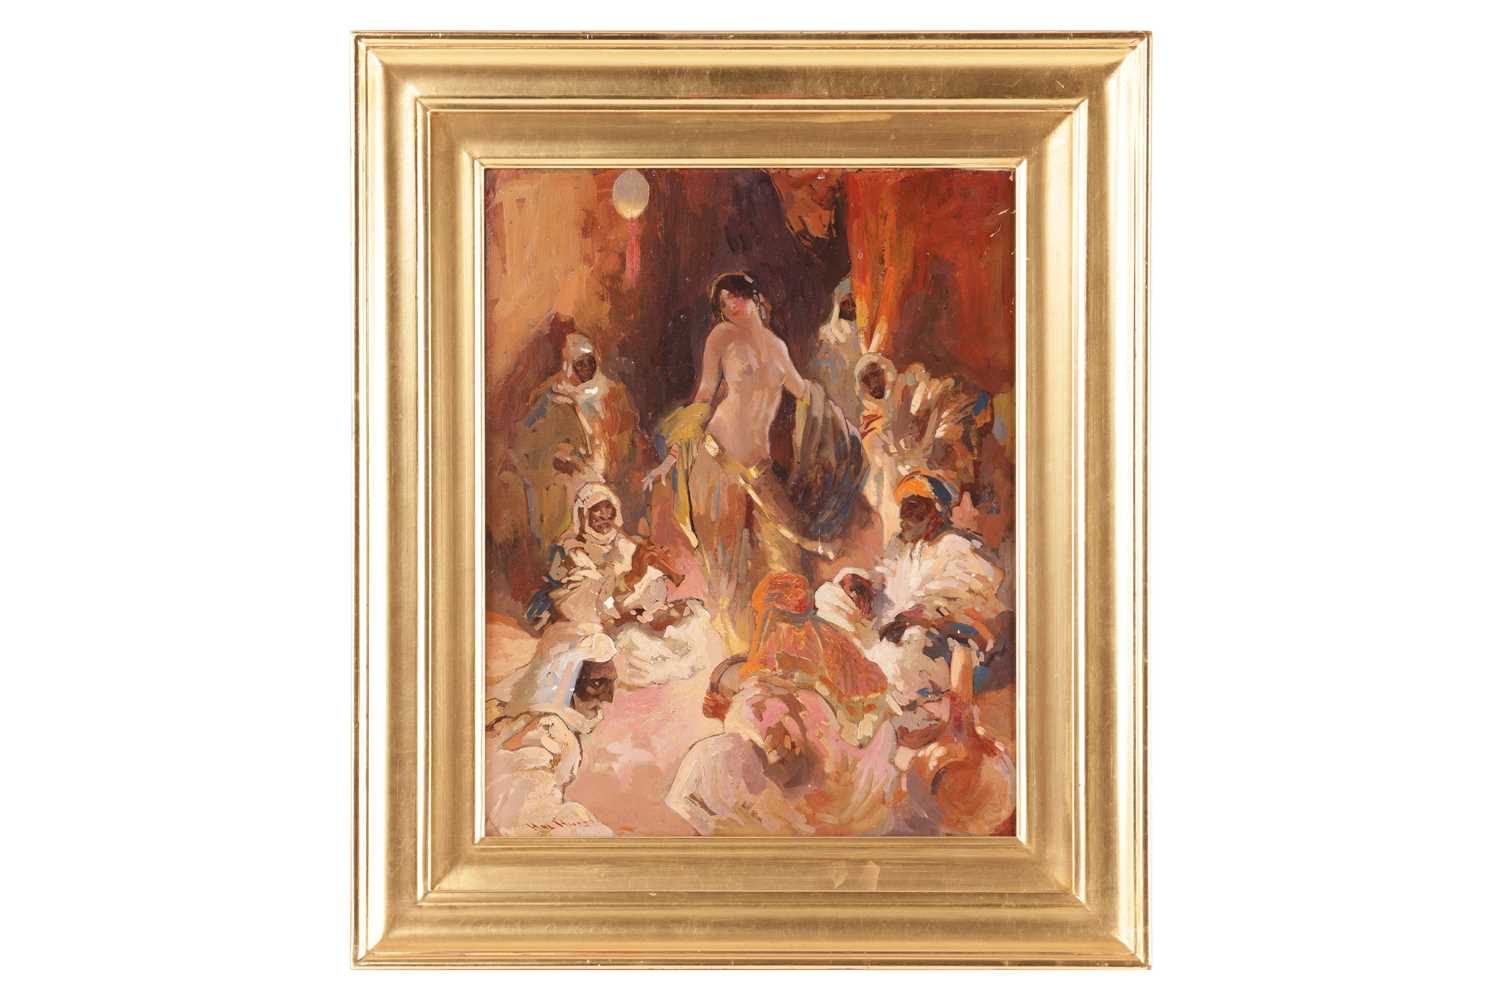 Hal Hurst (1865 - 1938), Dancing Girl, signed 'Hal Hurst' (lower left), oil on canvas, 41.5 x 33 cm,